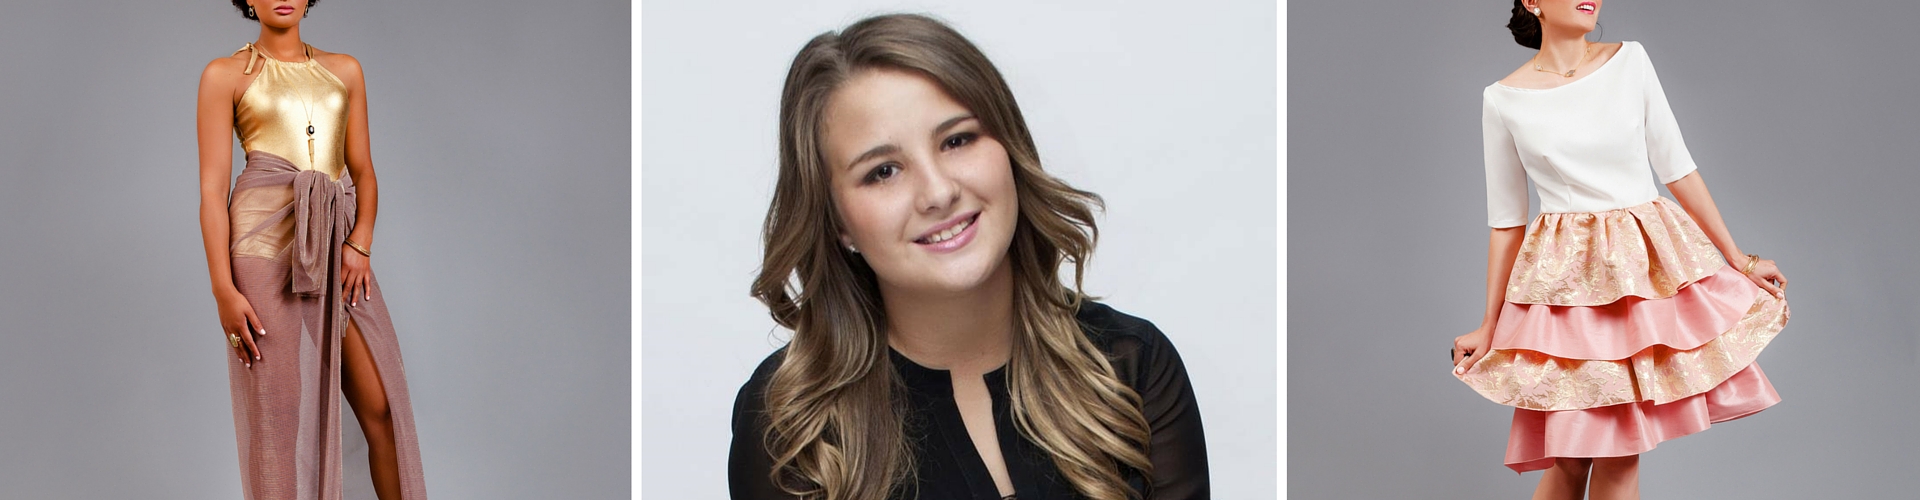 DESIGNER DISH: Meet Lauren Nicole, the 15-year-old designer